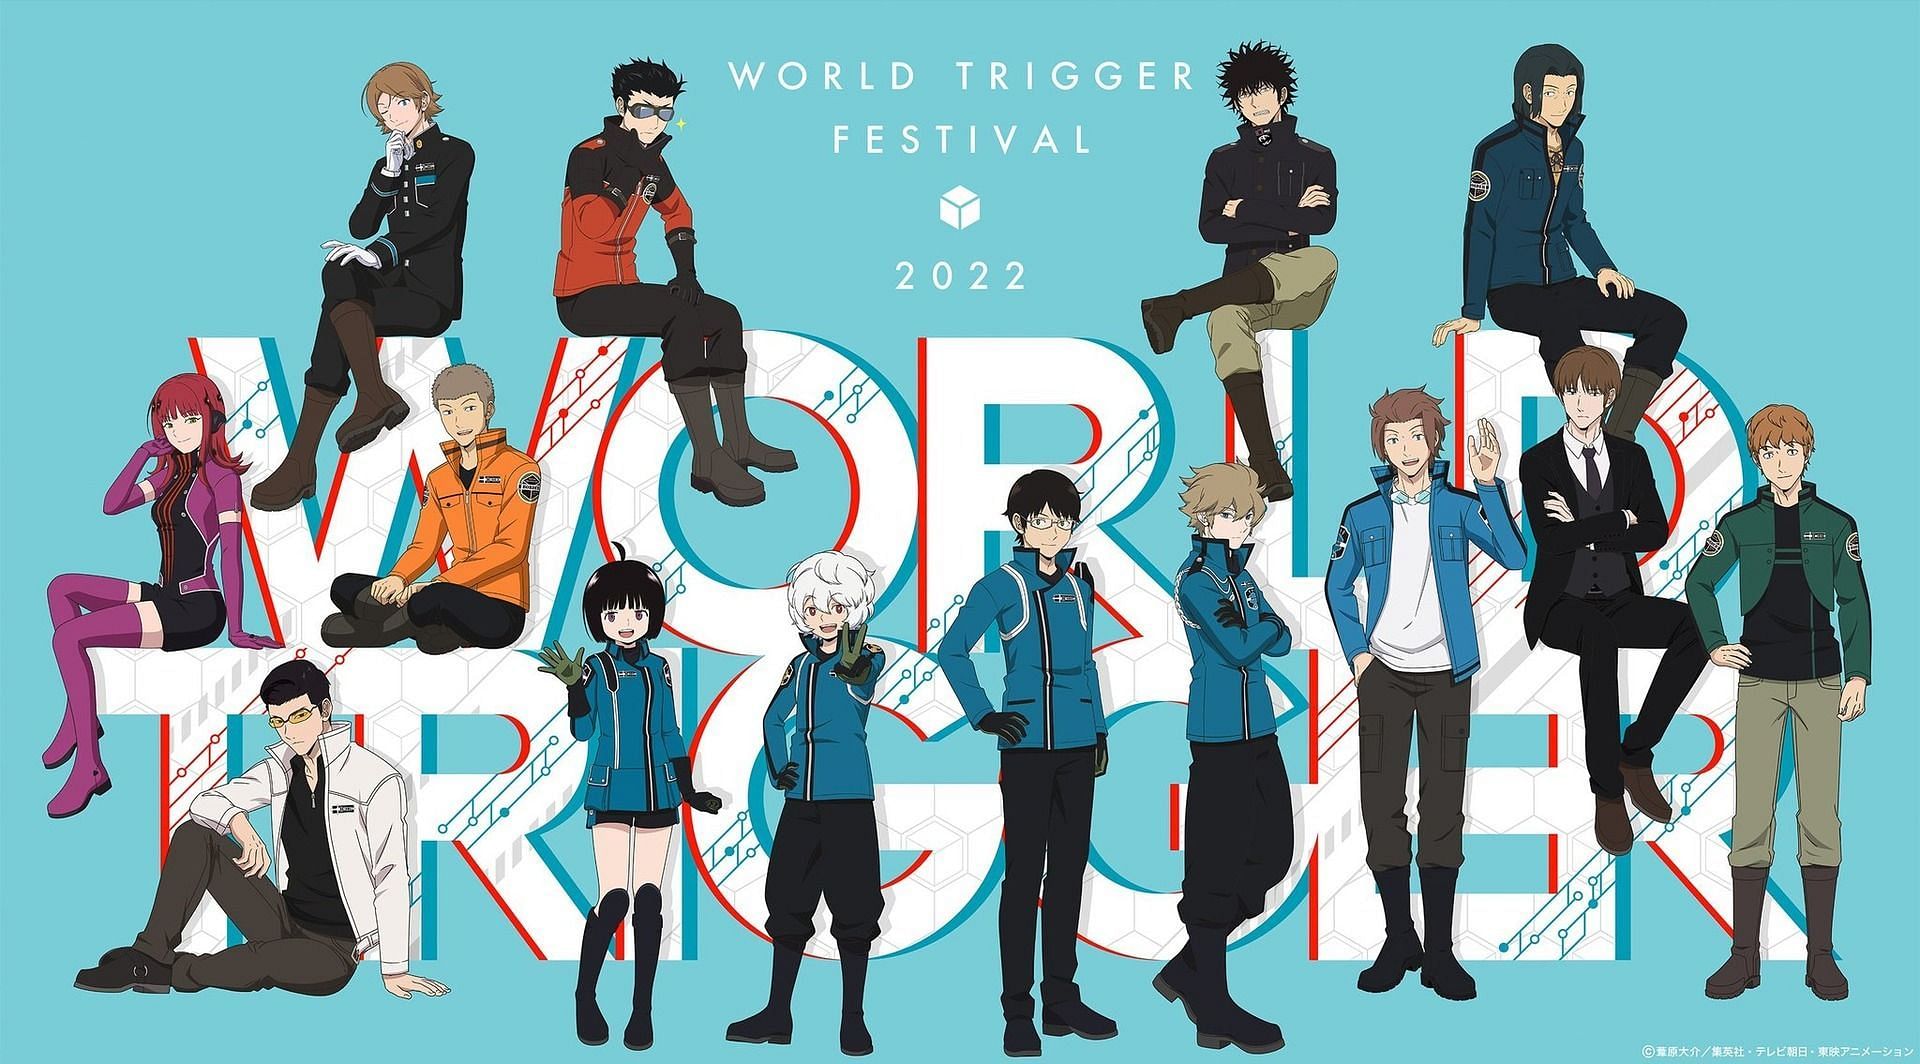 World Trigger (Image via Toei Animation)